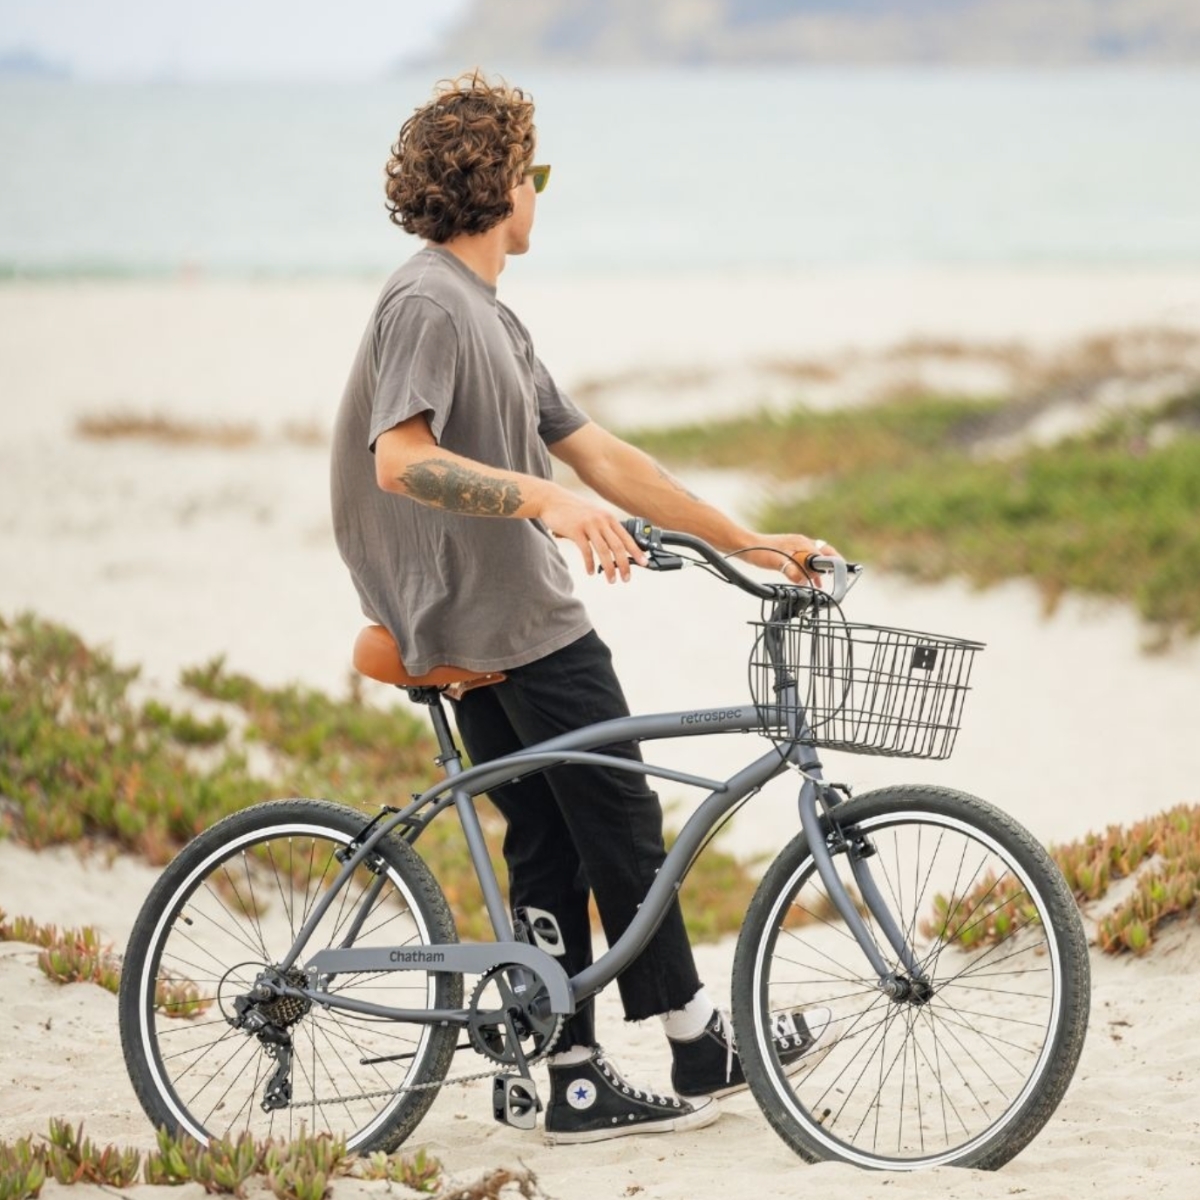 Man on beach holding bicycle with metal bike basket